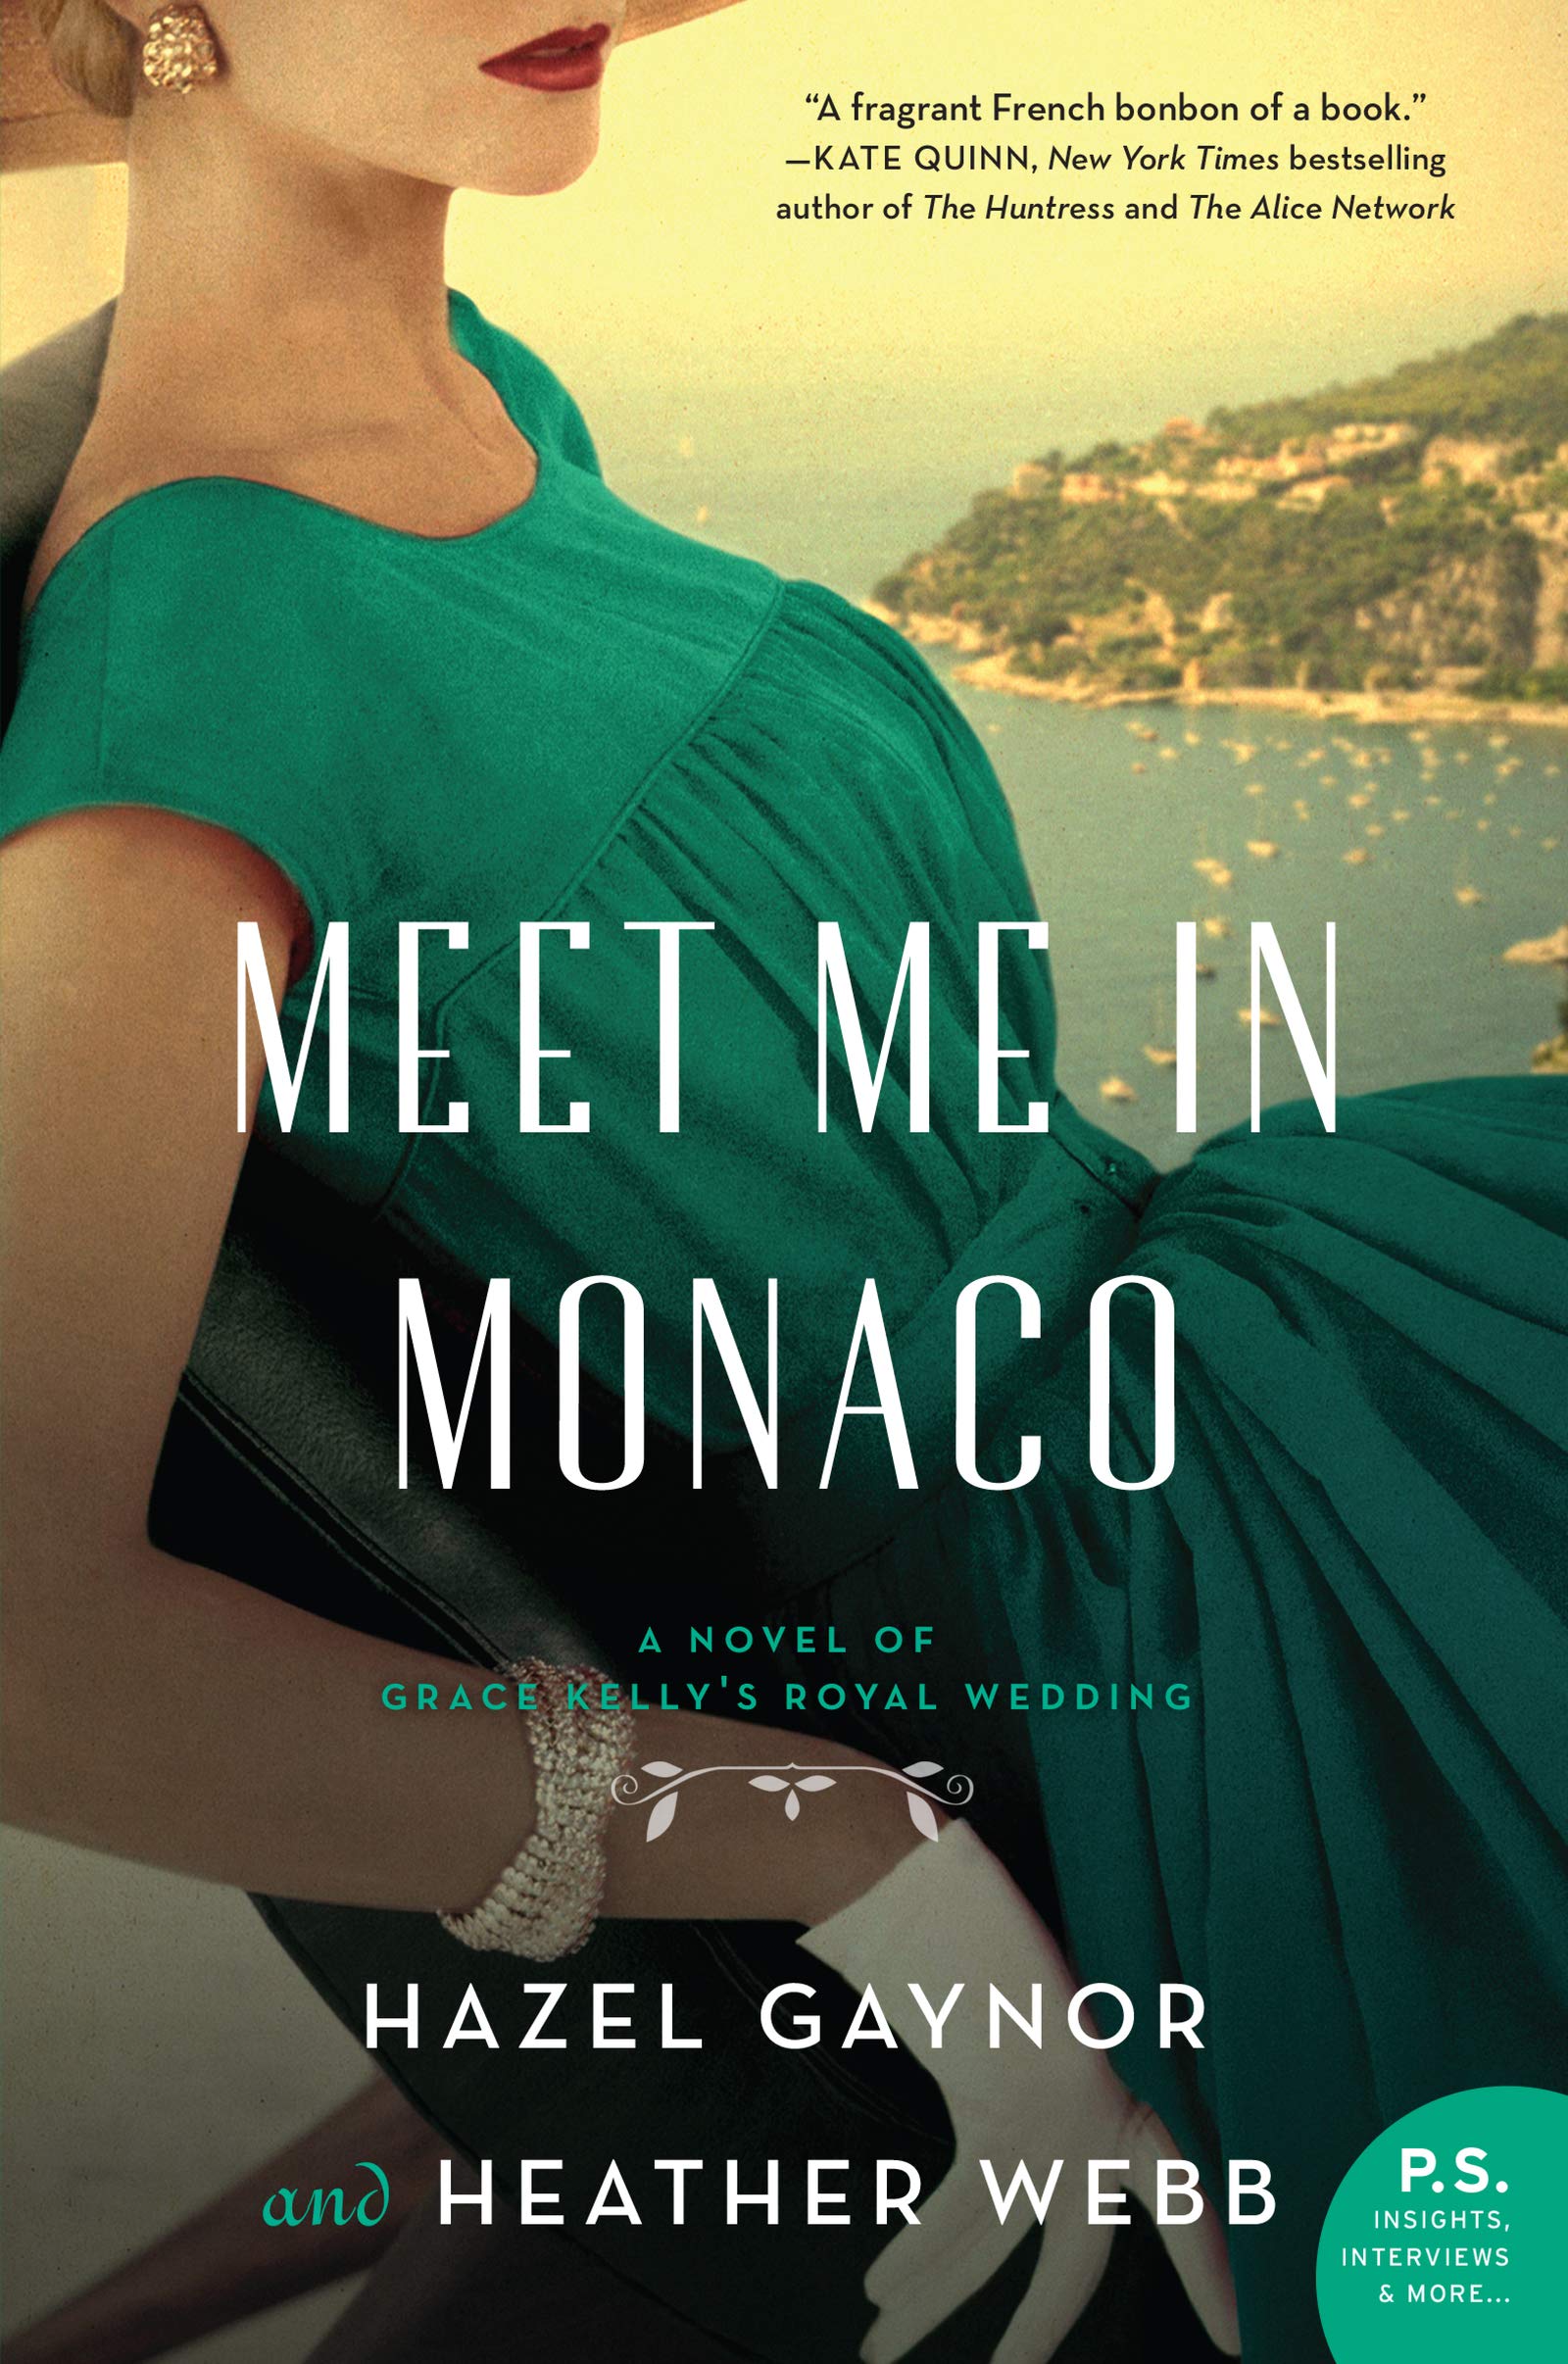 Image for "Meet Me in Monaco"